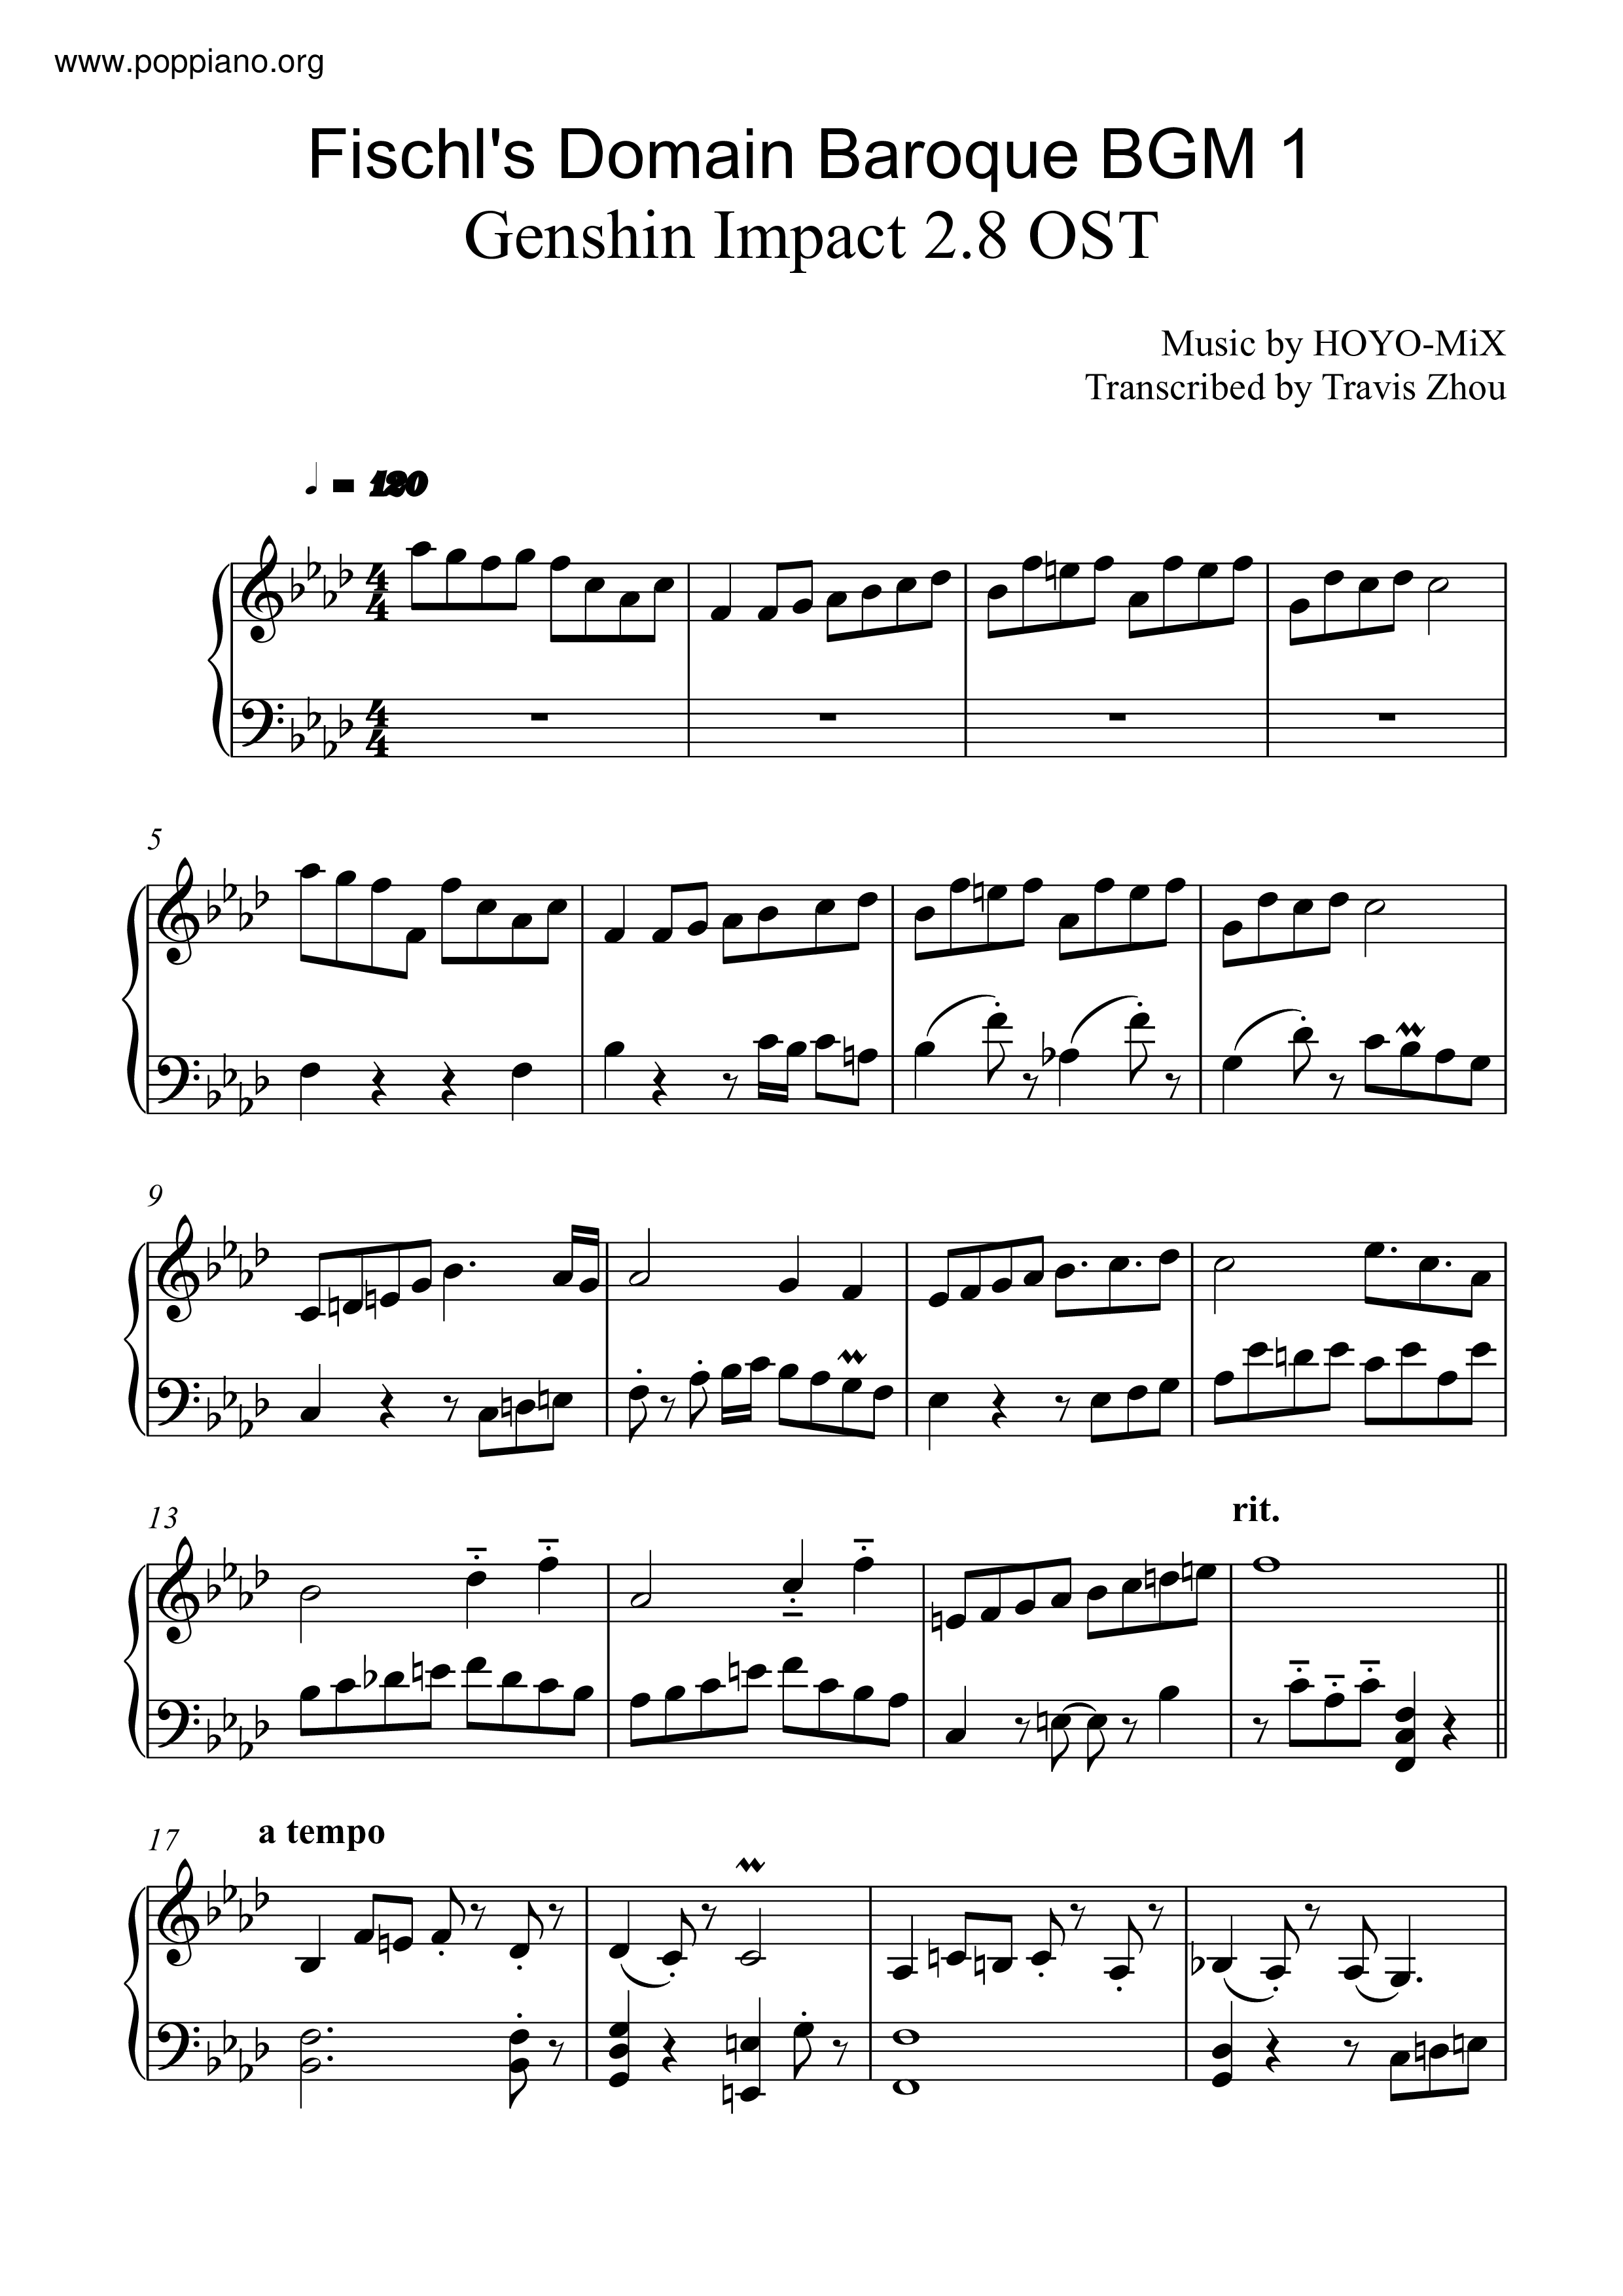 Genshin Impact 2.8 OST - Fischl's Domain Baroque BGM 1ピアノ譜